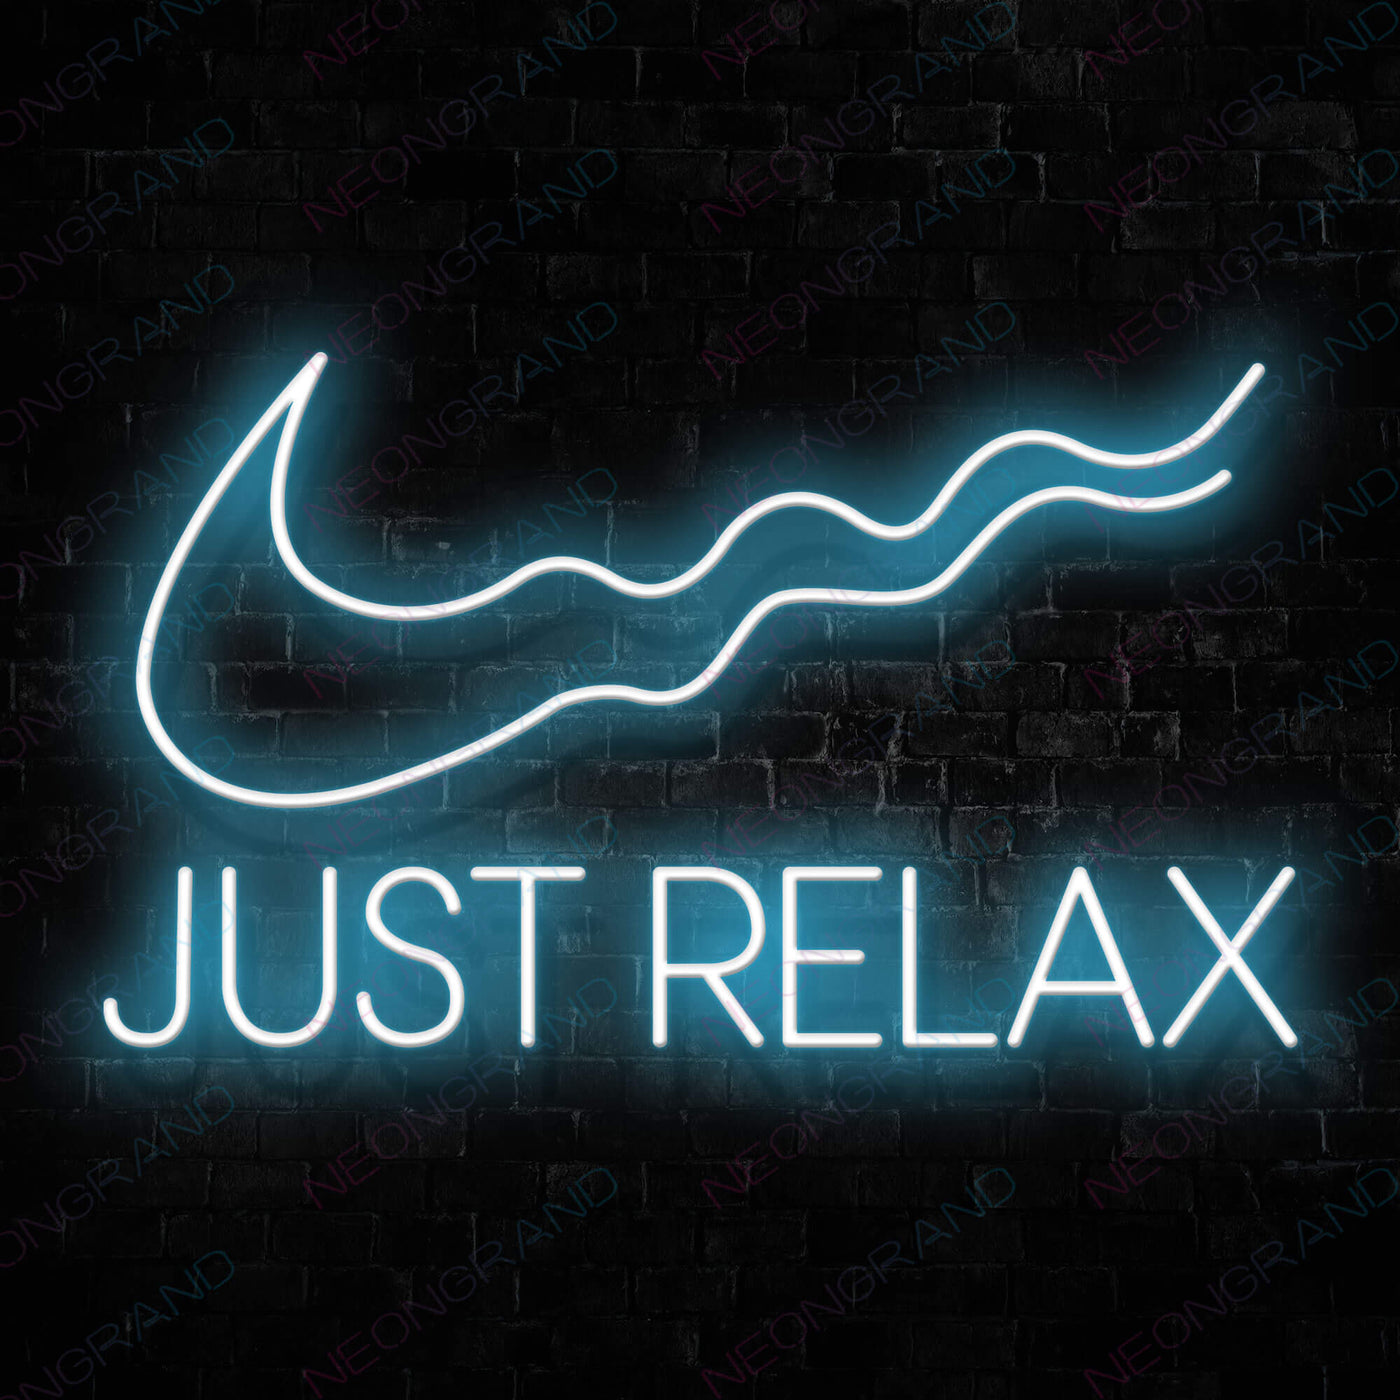 Just Relax Neon Sign Led Light light blue